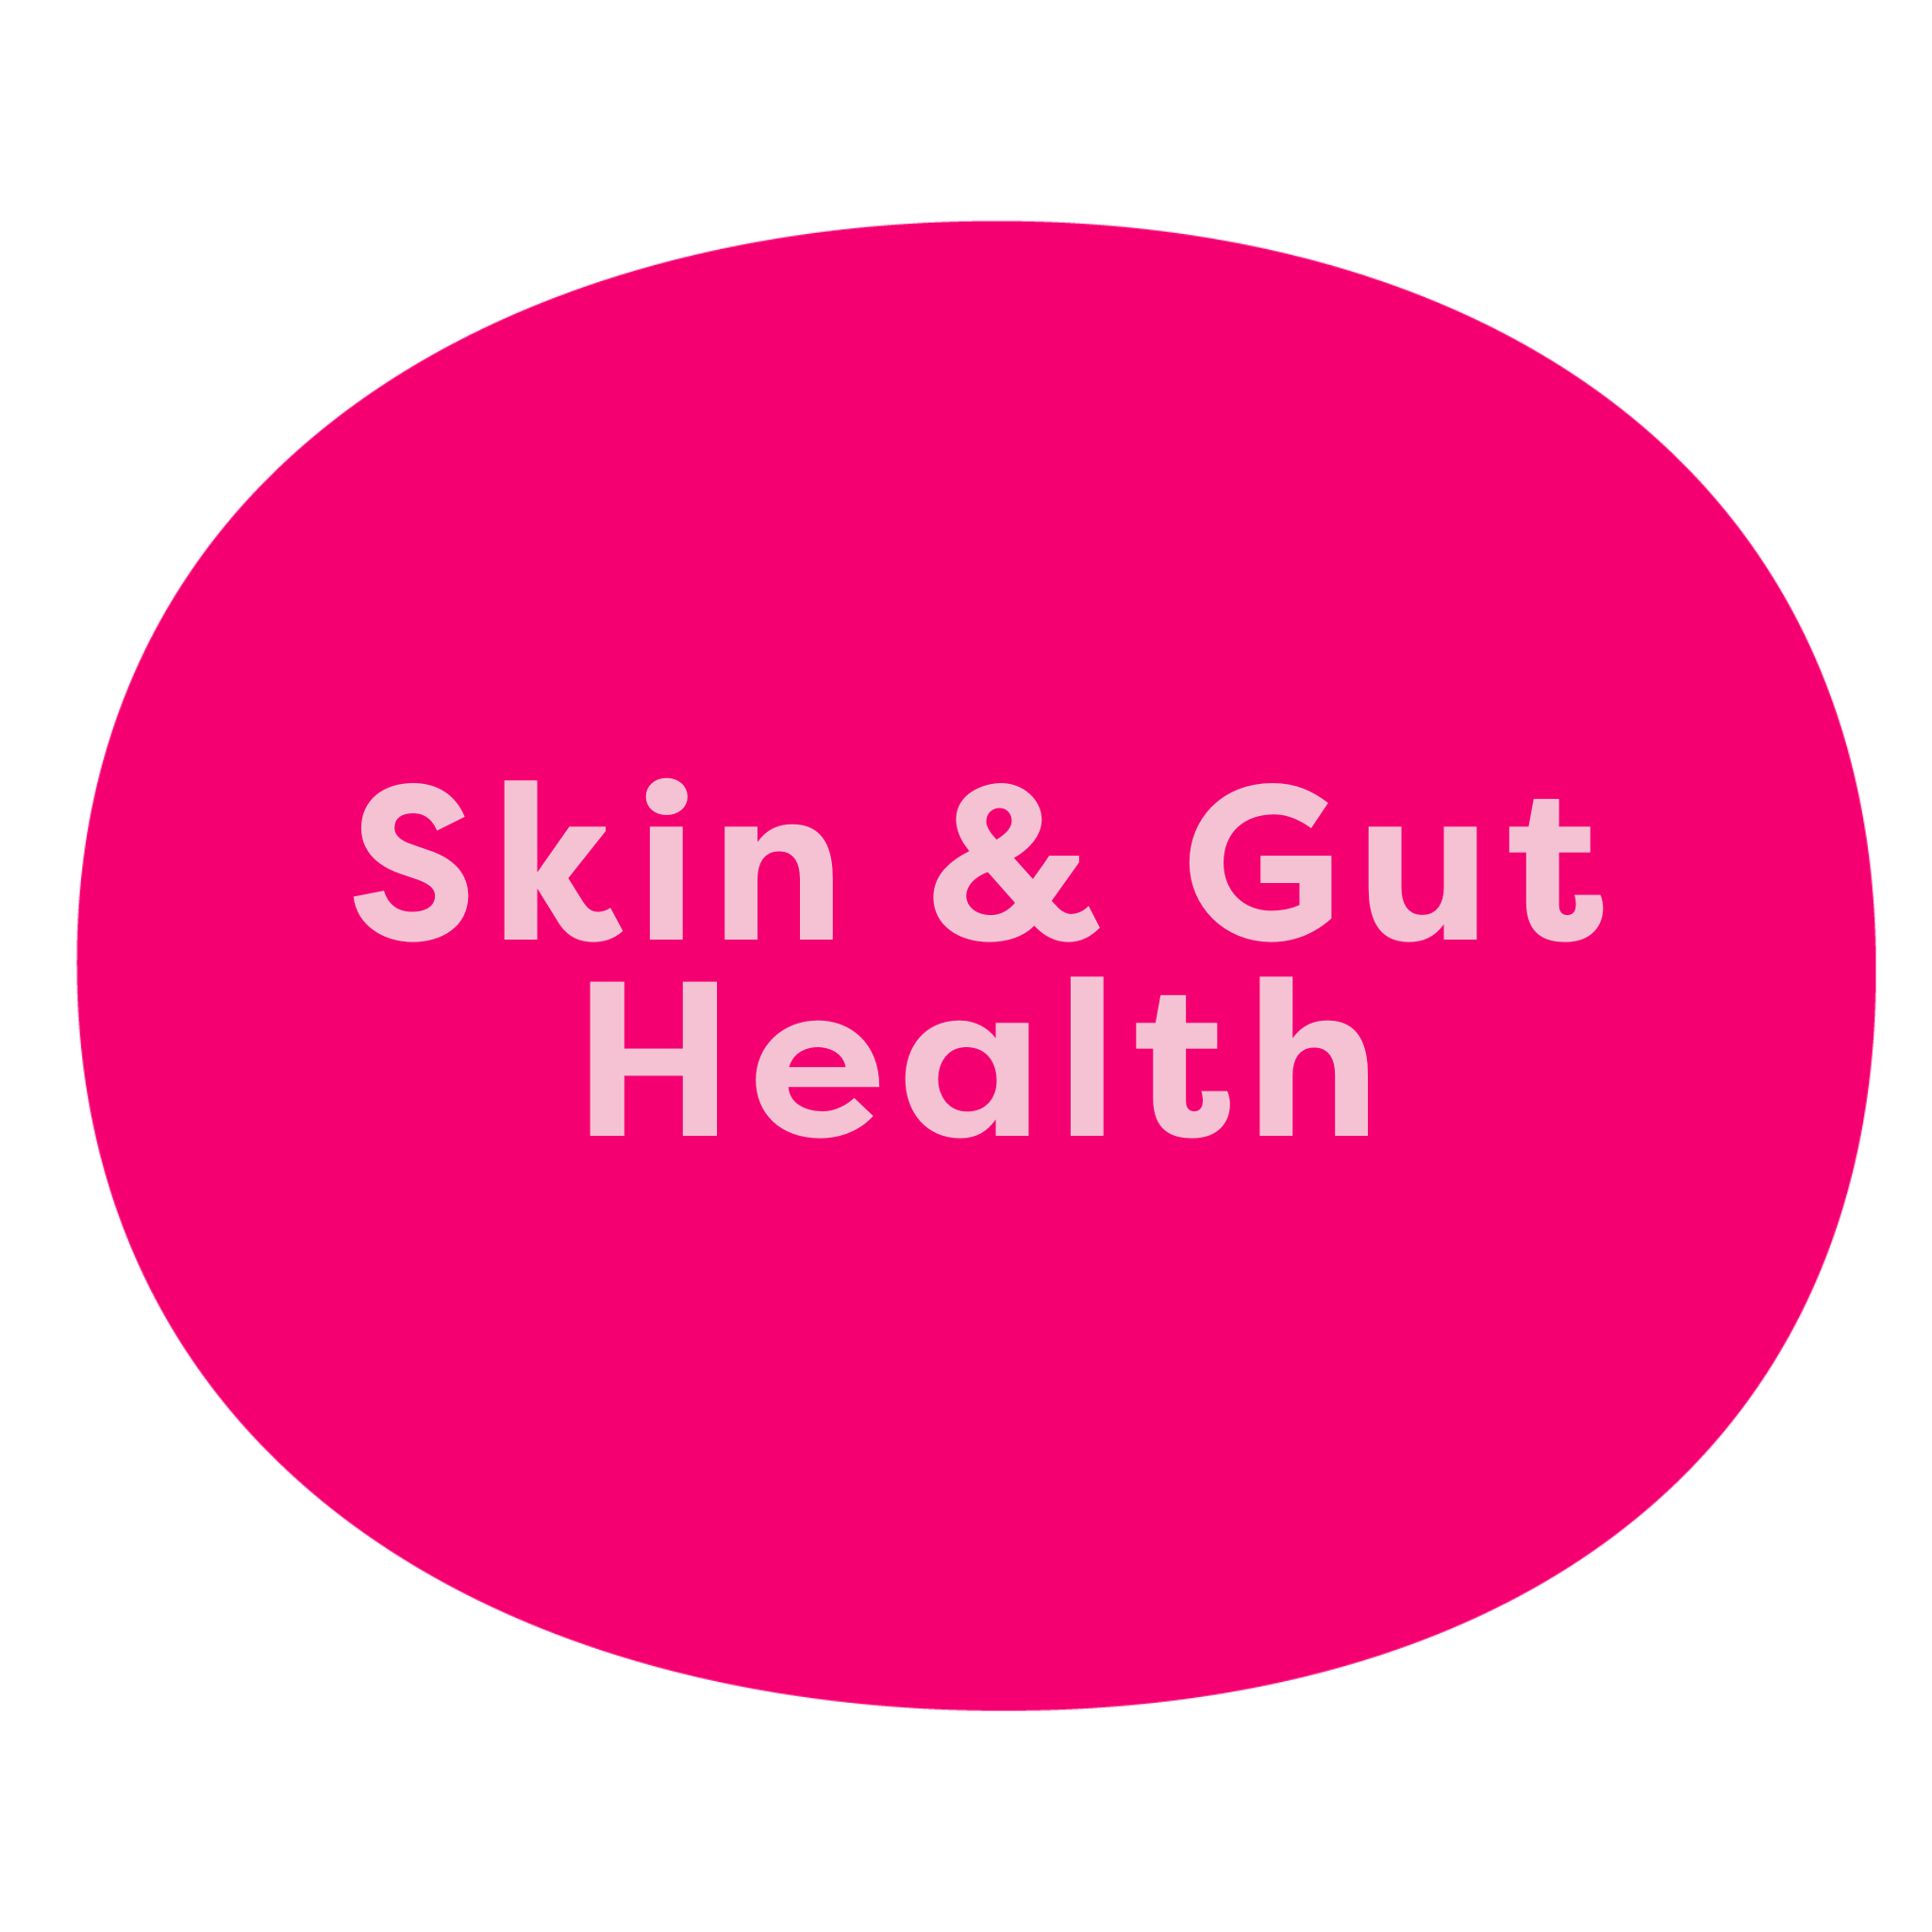 Skin & Gut Health